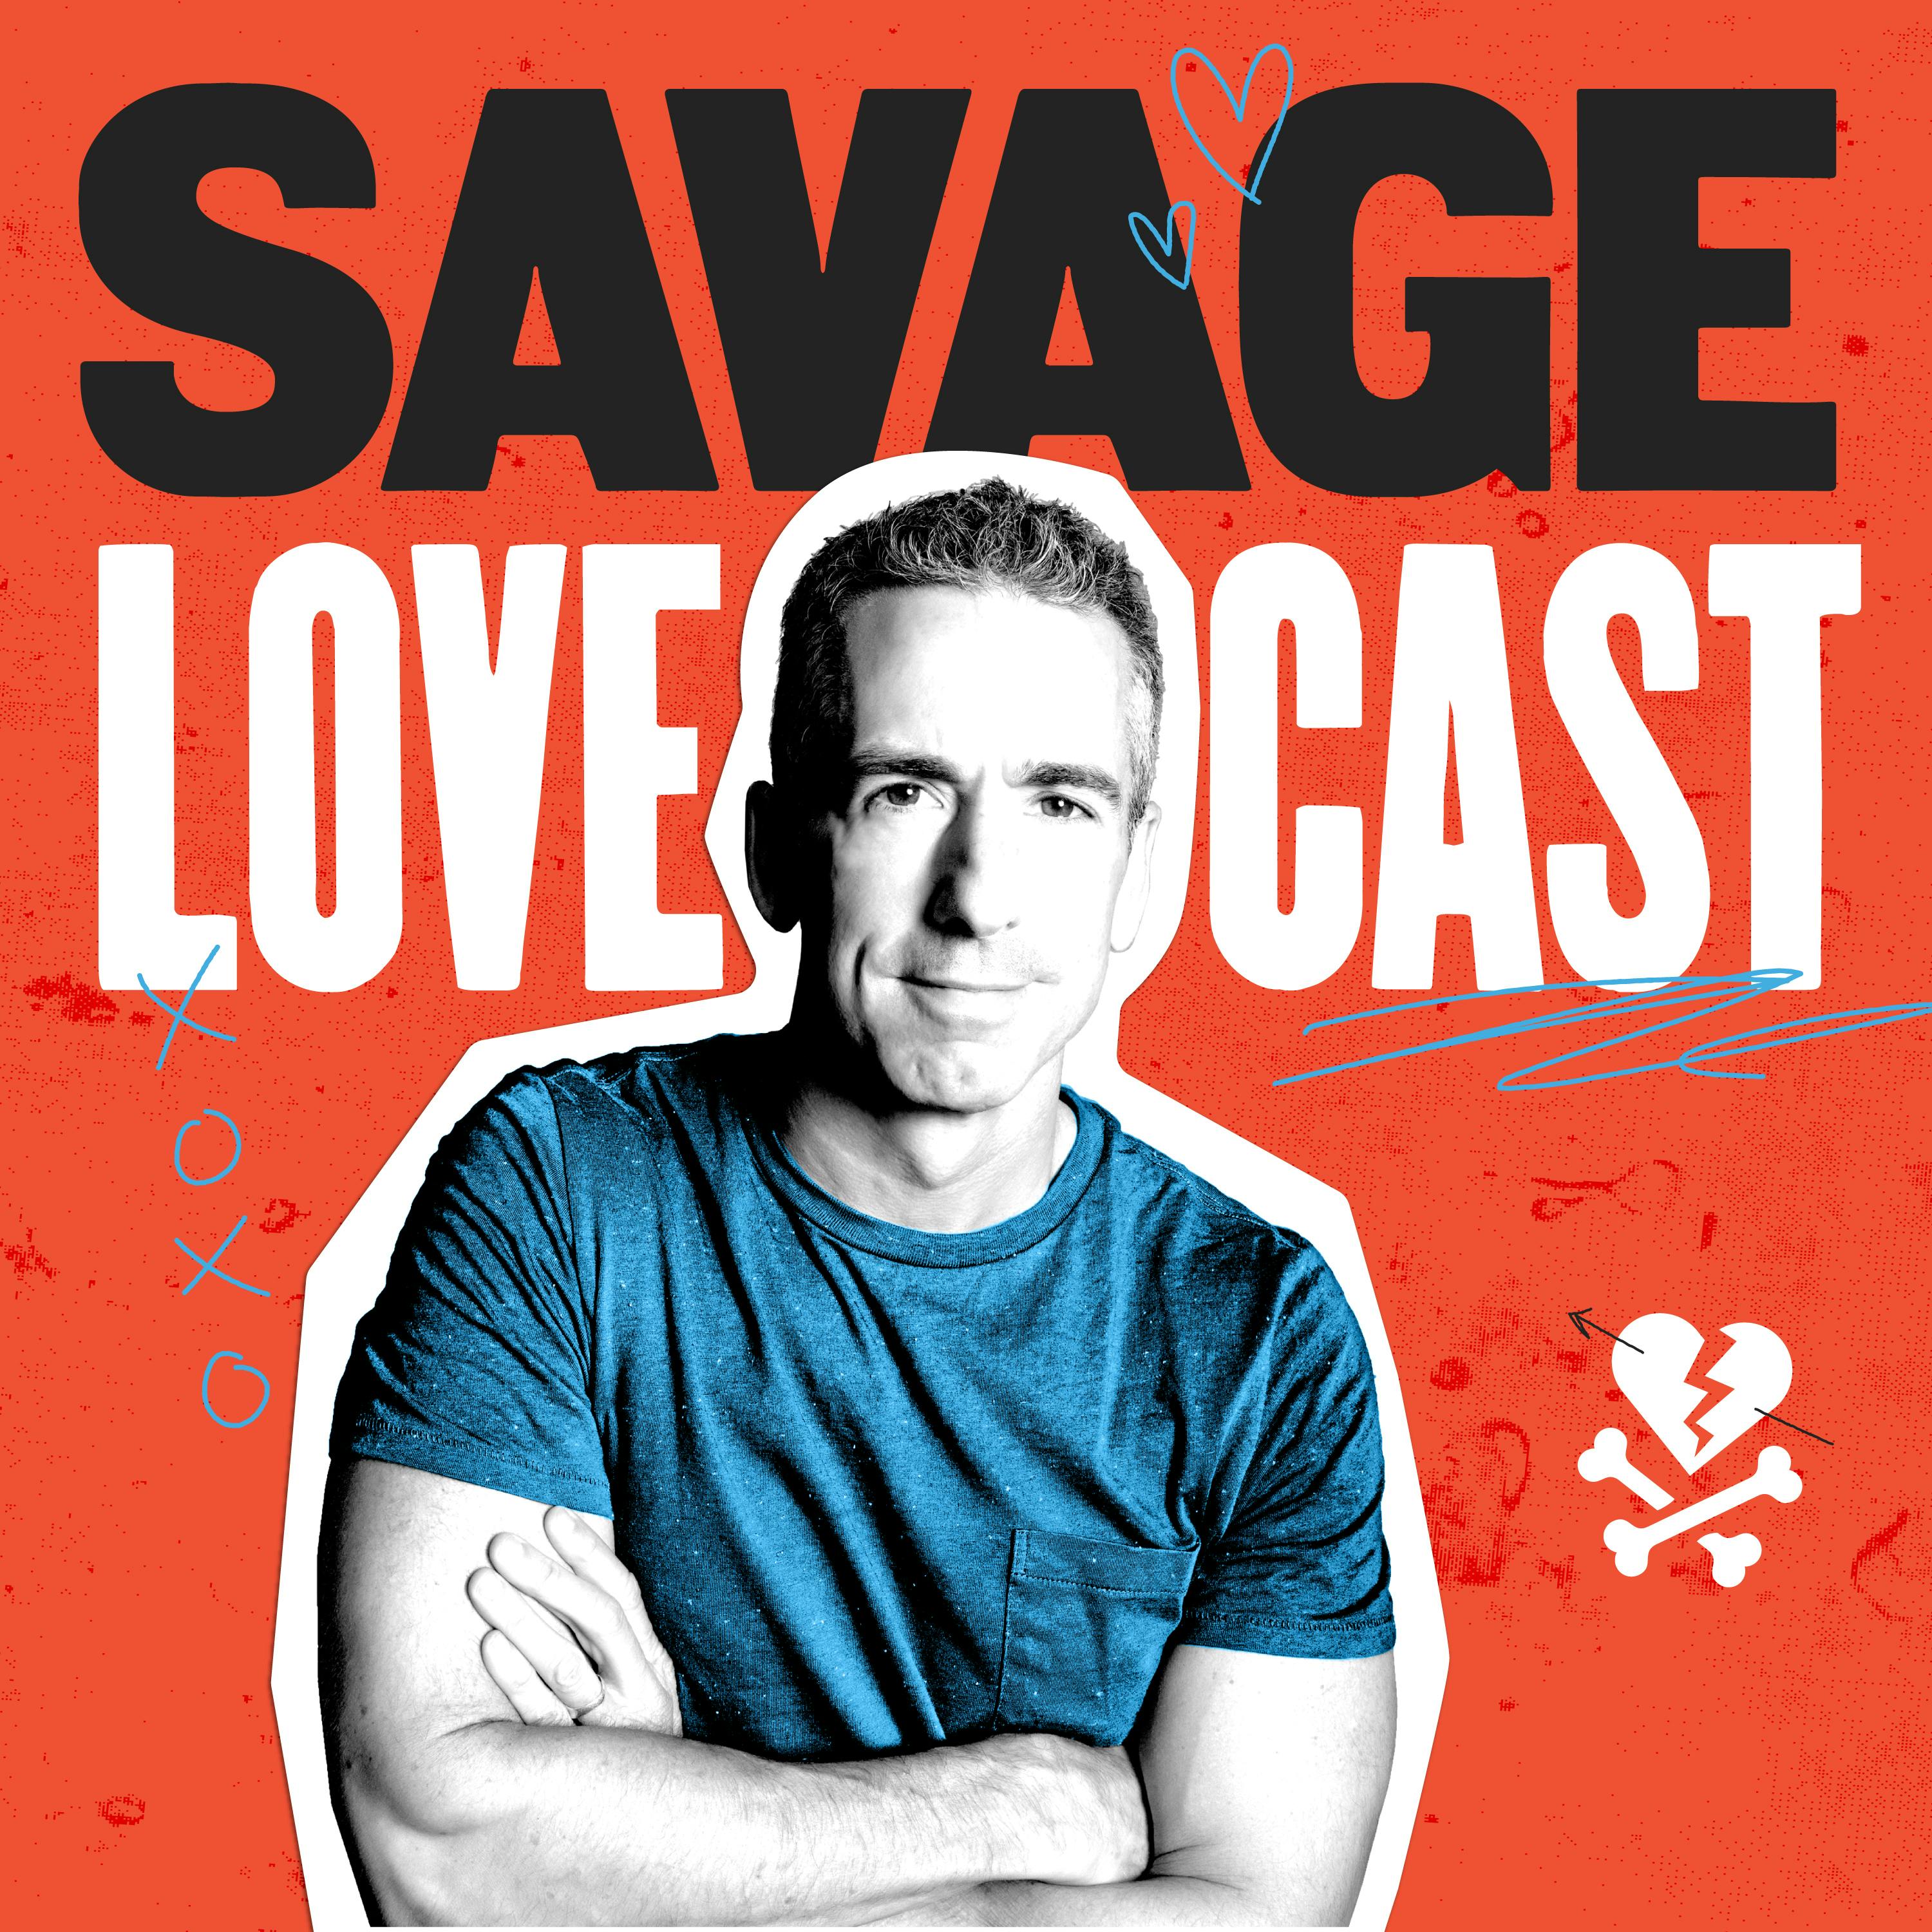 Savage Lovecast podcast show image